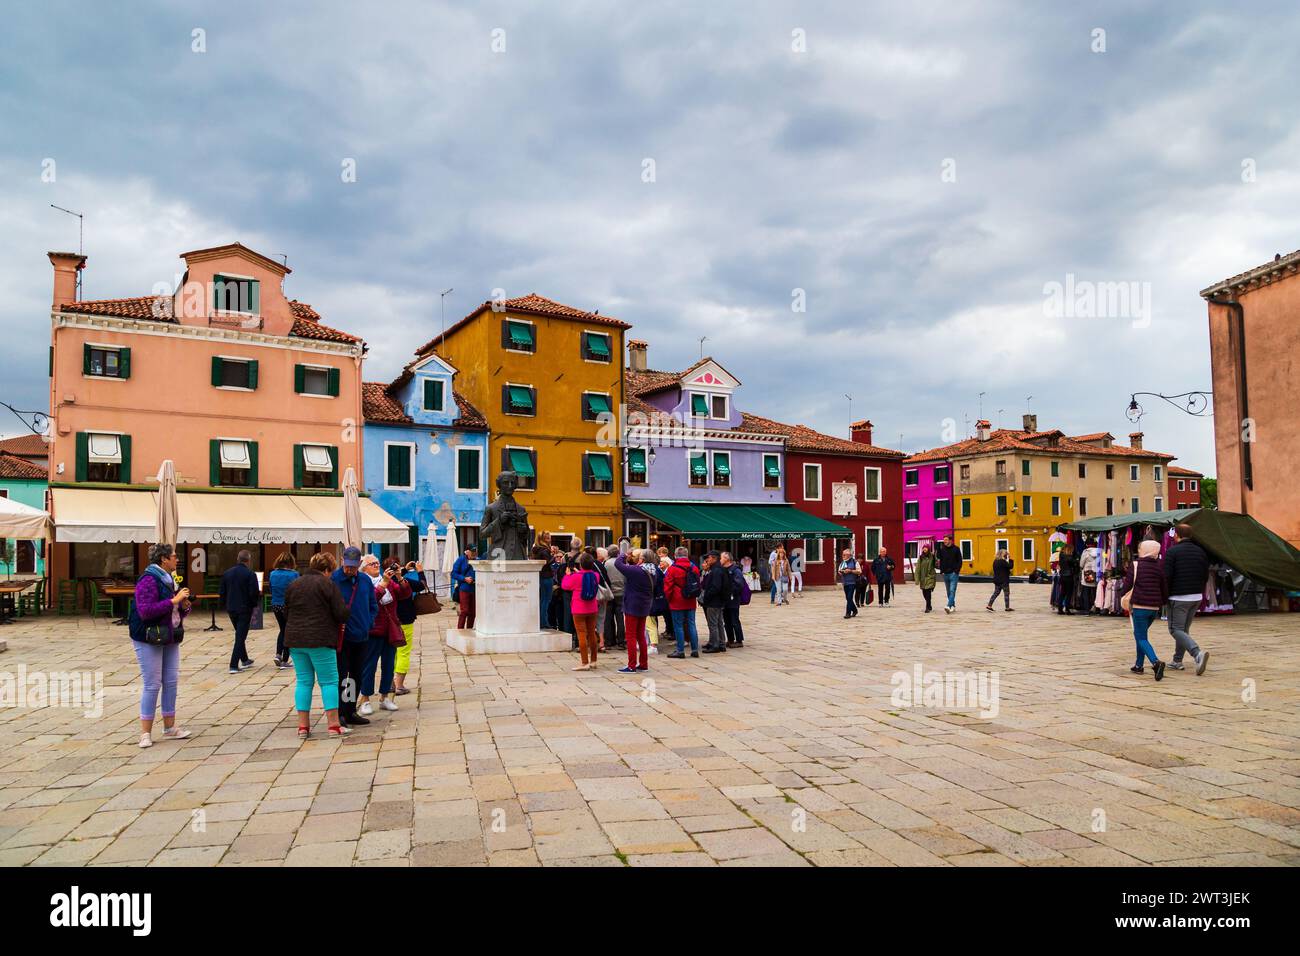 Burano, Italy - October, 6 2019: Tourists near the statue of Baldassare Galuppi in the main square of Burano, the Piazza Galuppi. Bright traditional colorful buildings on Burano island, Venice, Italy. Stock Photo